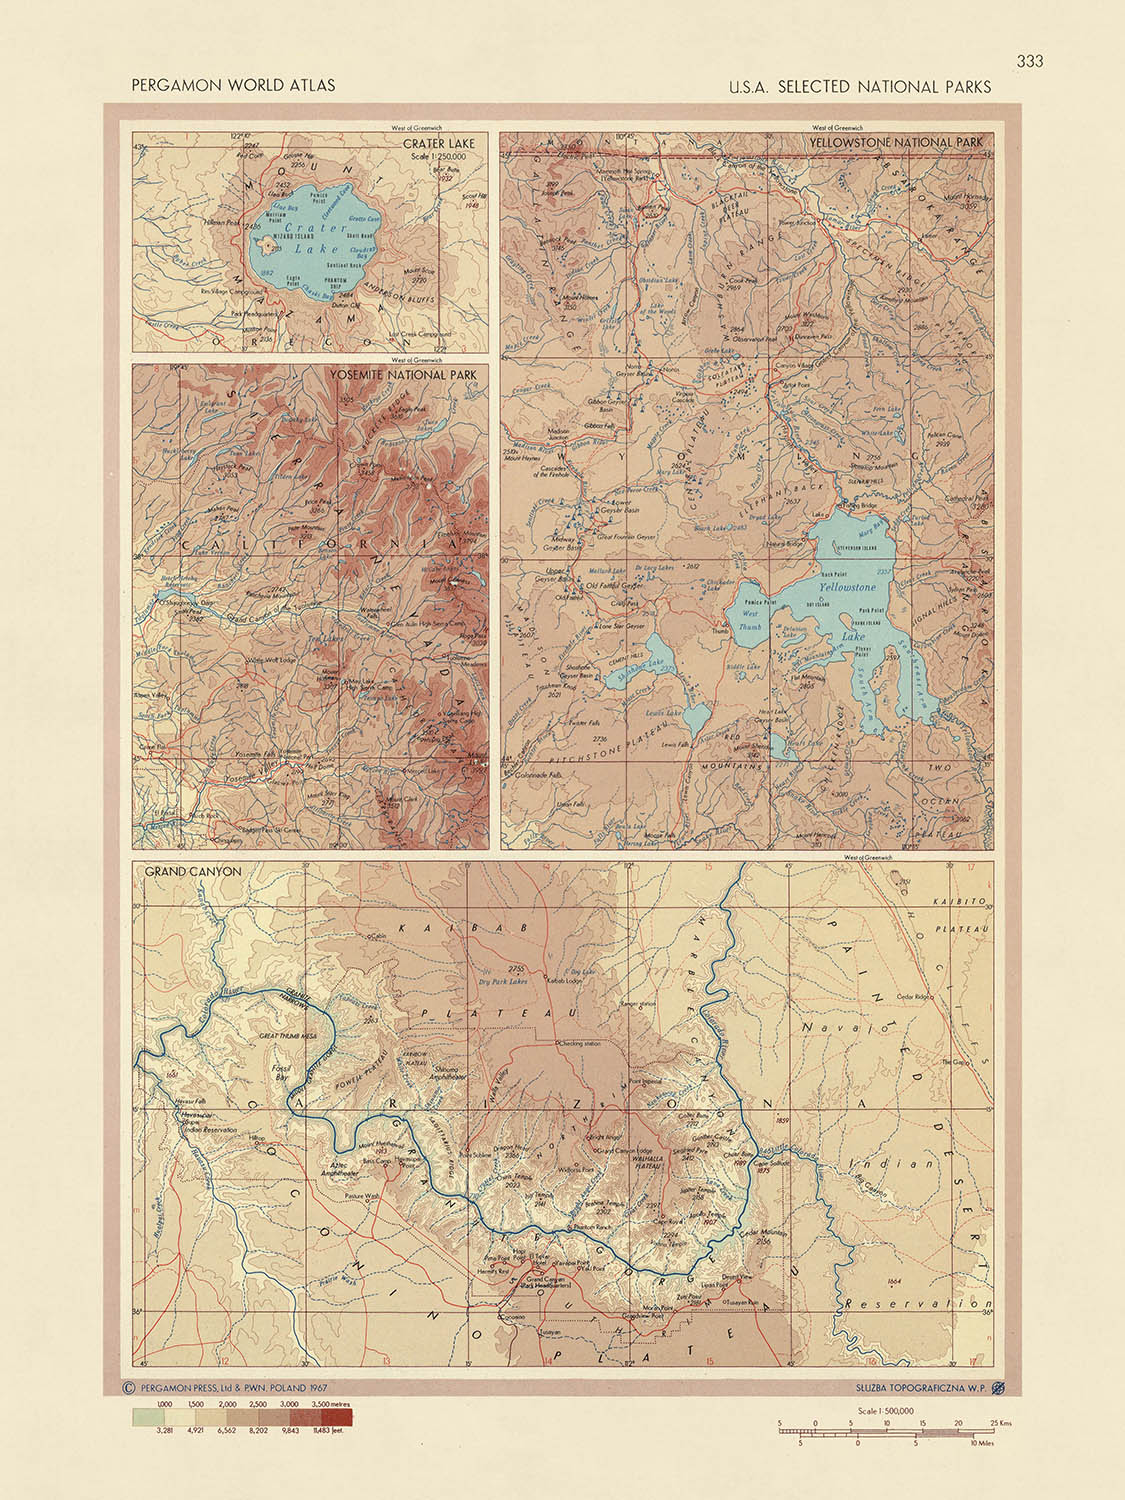 Old Map of USA National Parks, 1967: Yellowstone, Grand Canyon, Yosemite, Crater Lake